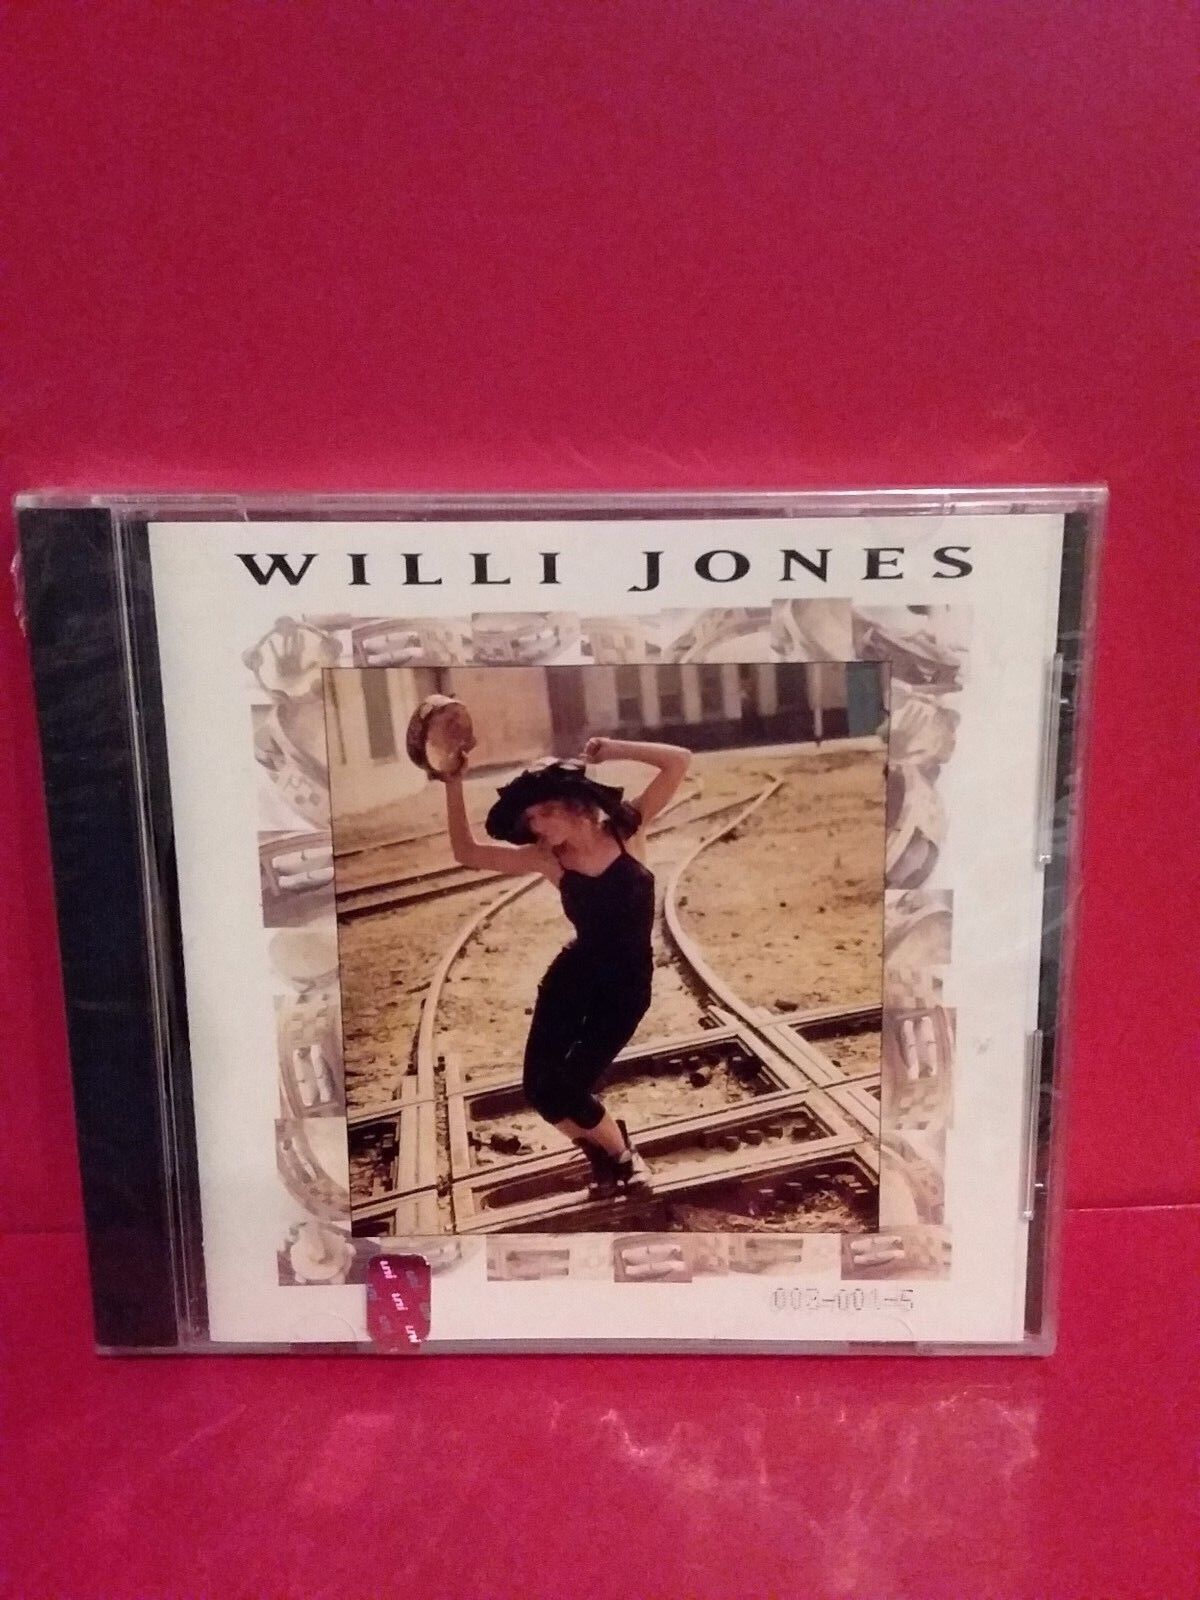 CD Willi Jones New and sealed